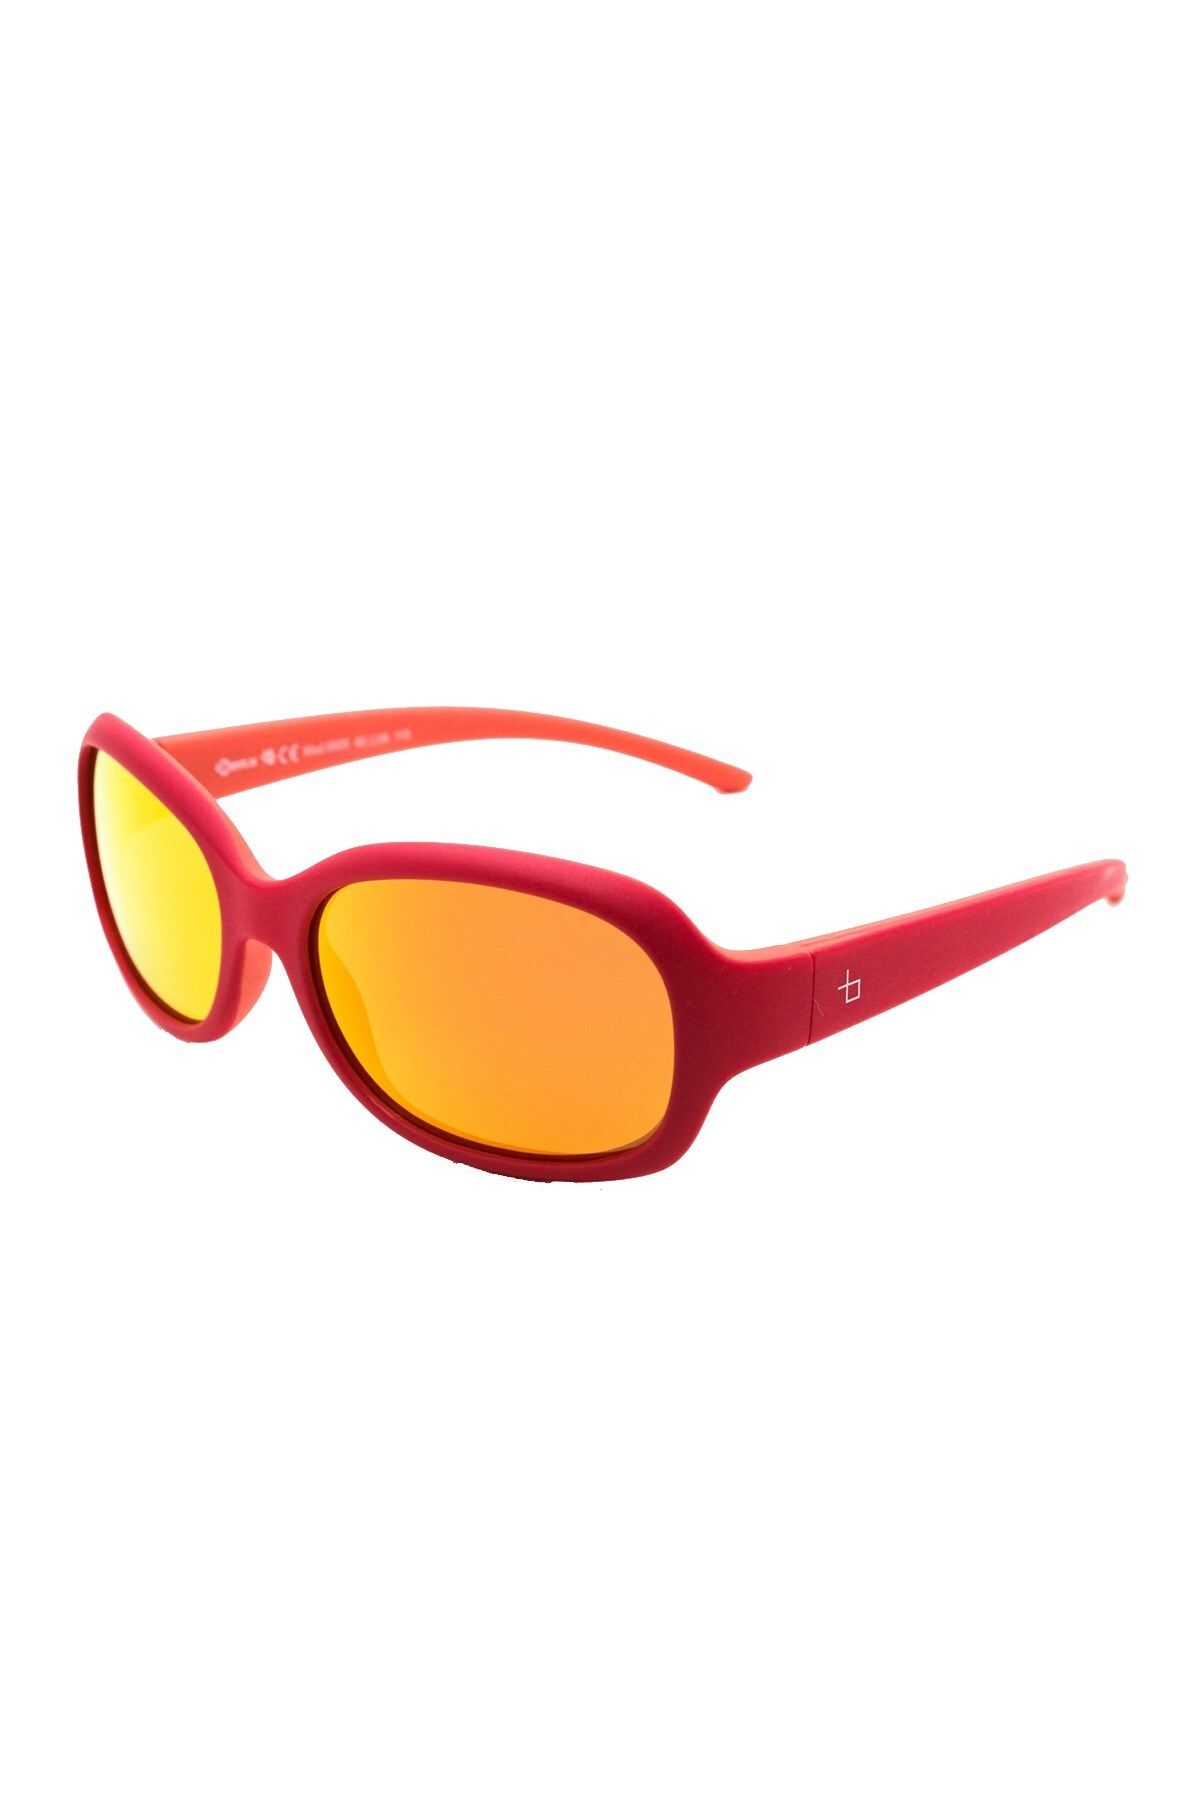 Benx Sunglasses Benx Bxs 9505-c.204 Çocuk Güneş Gözlüğü